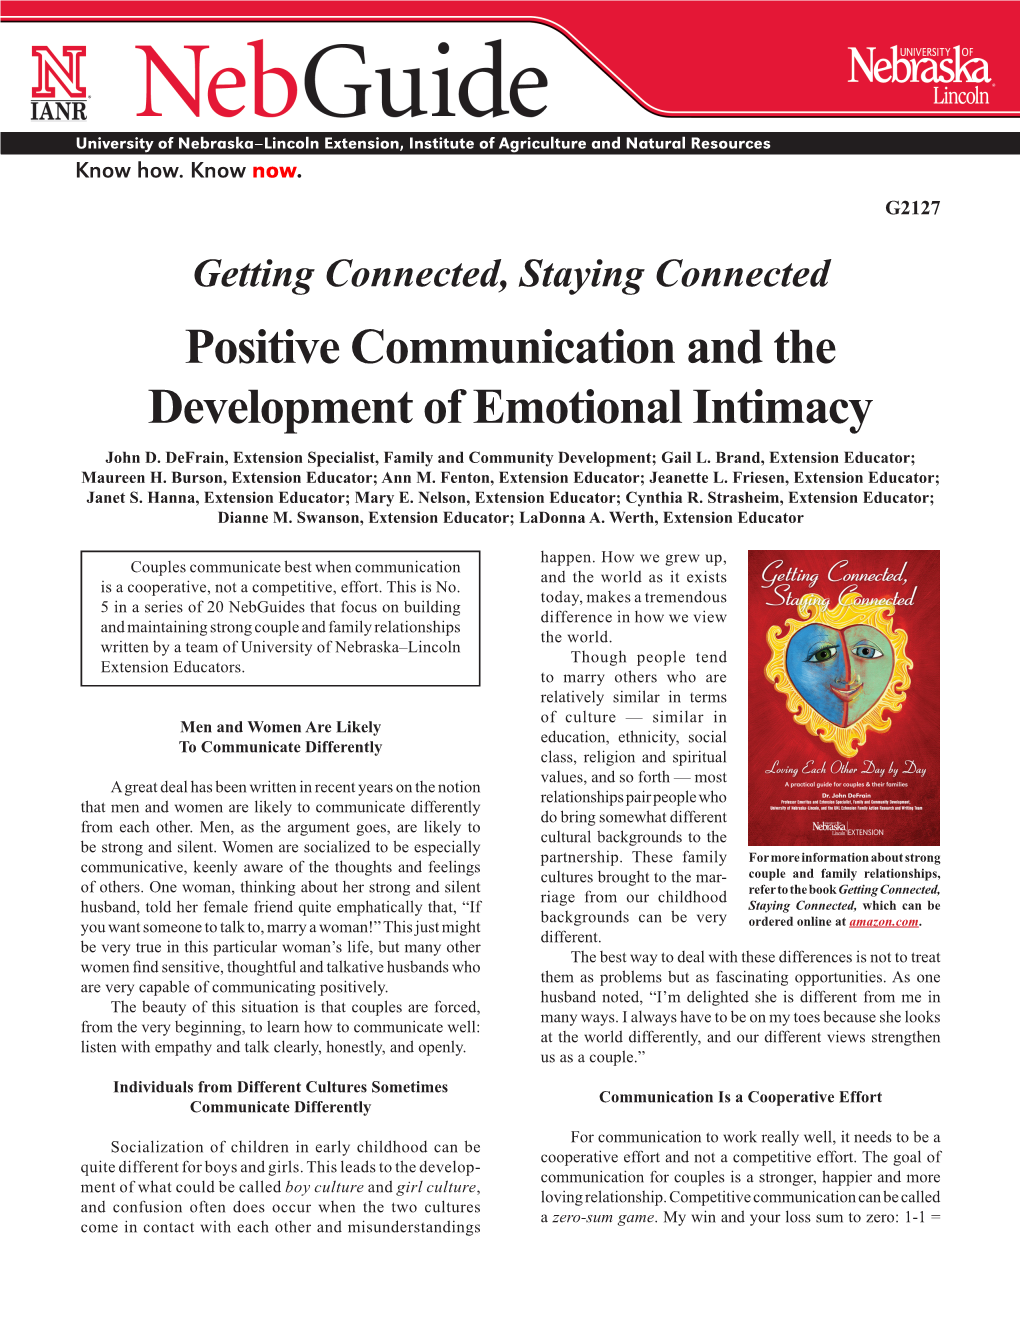 Positive Communication and the Development of Emotional Intimacy John D